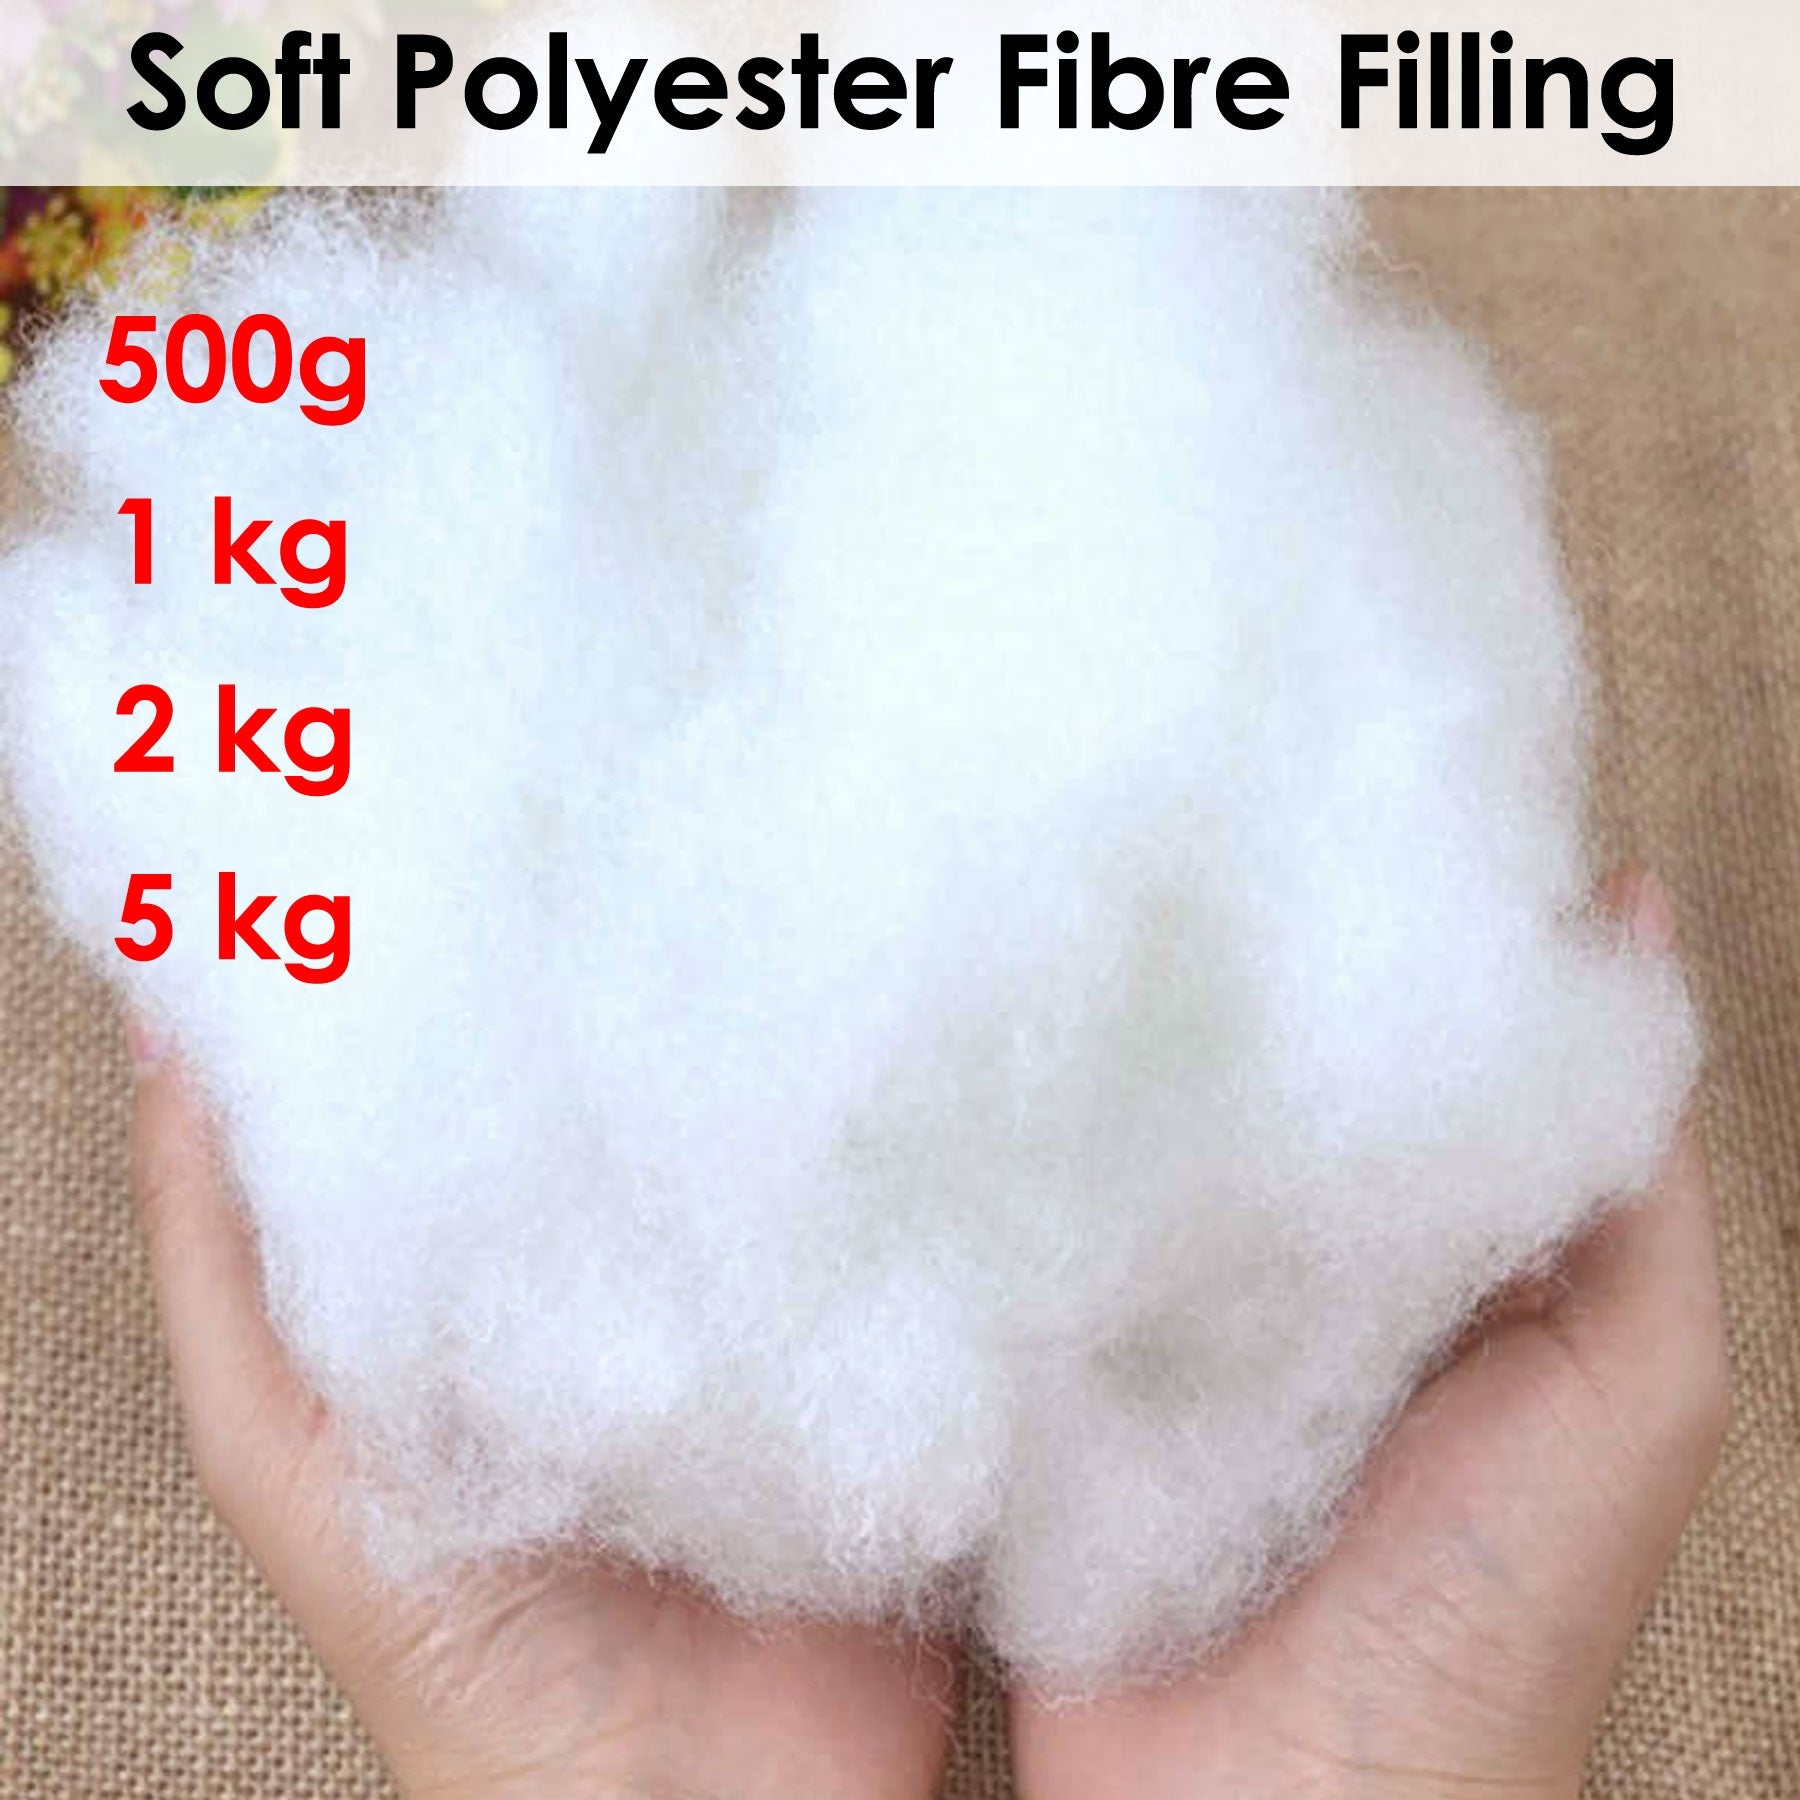 Soft Polyester Fiber Filling 500g